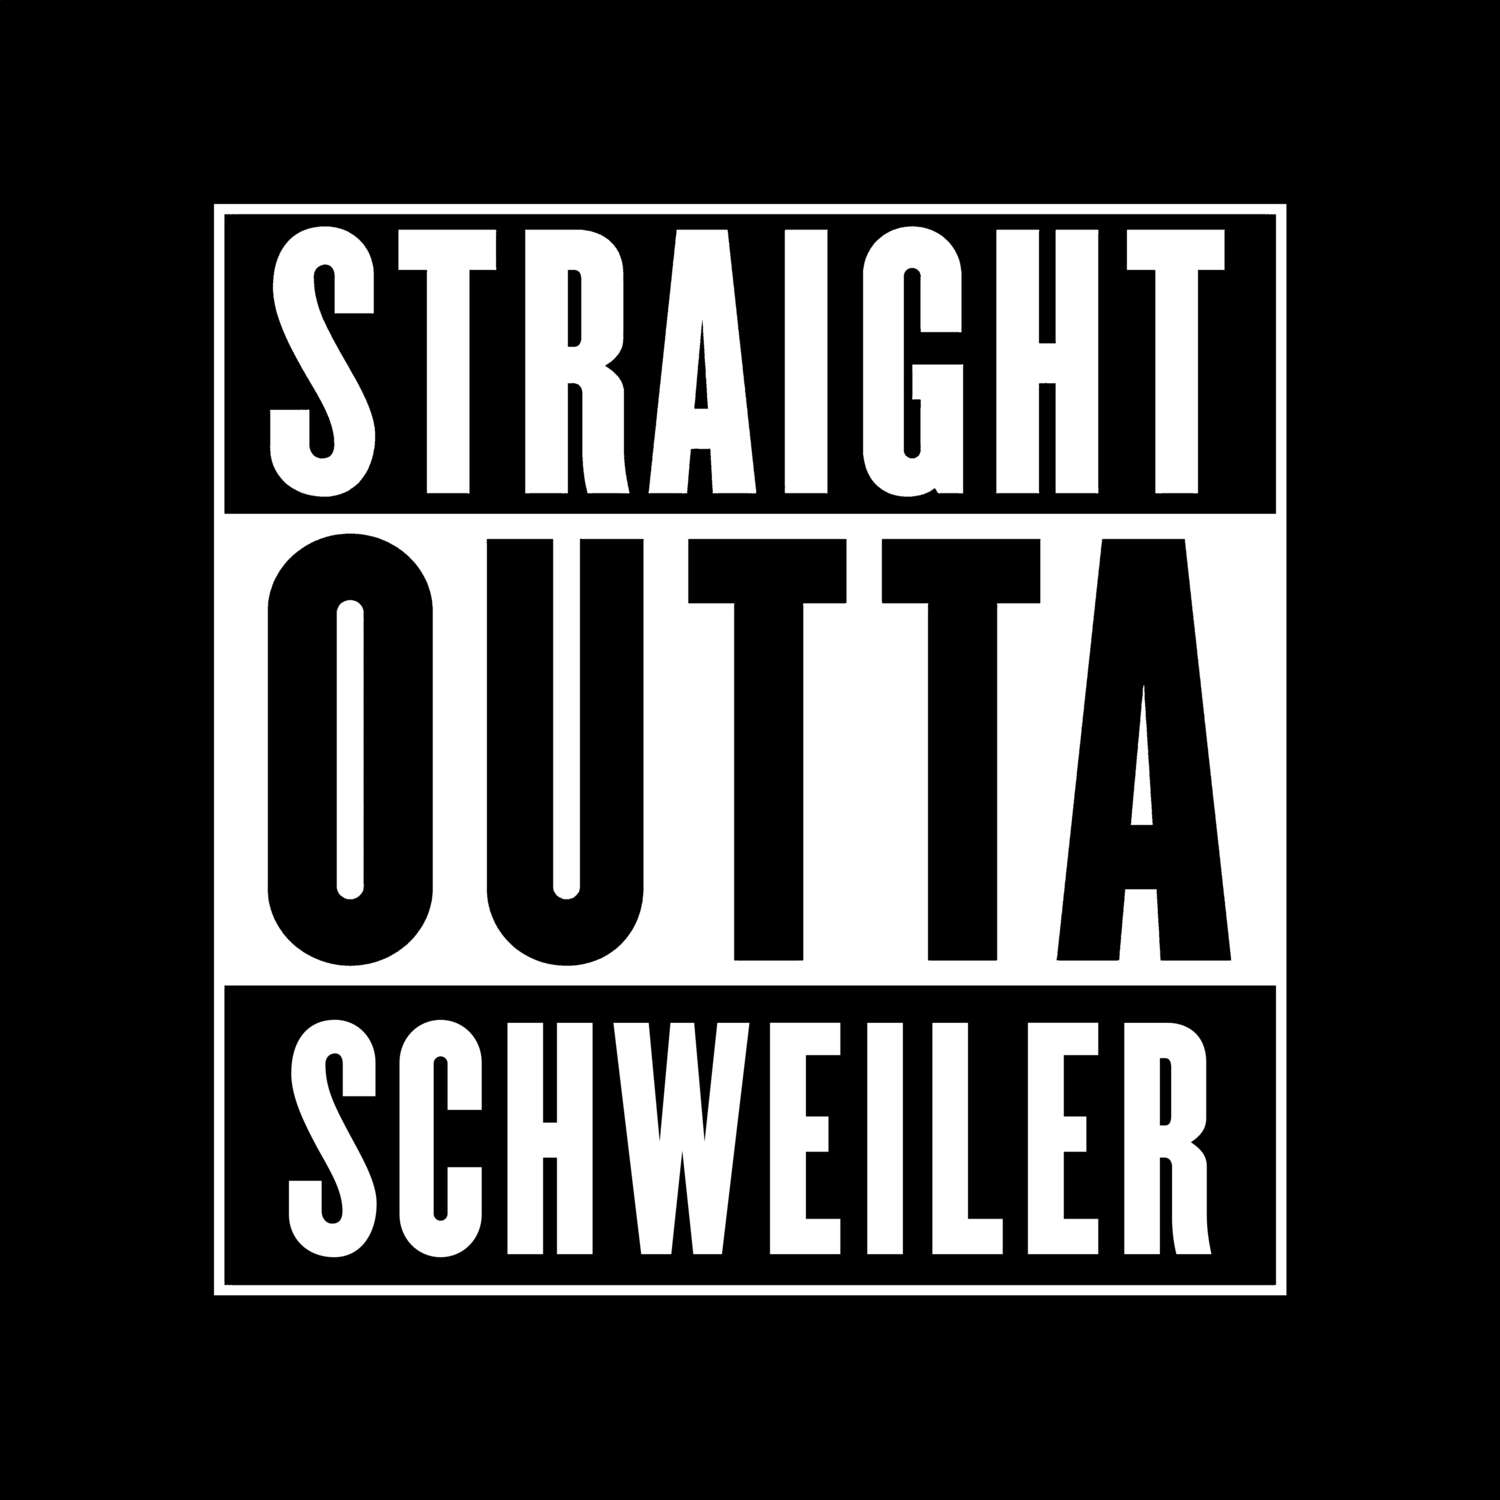 Schweiler T-Shirt »Straight Outta«